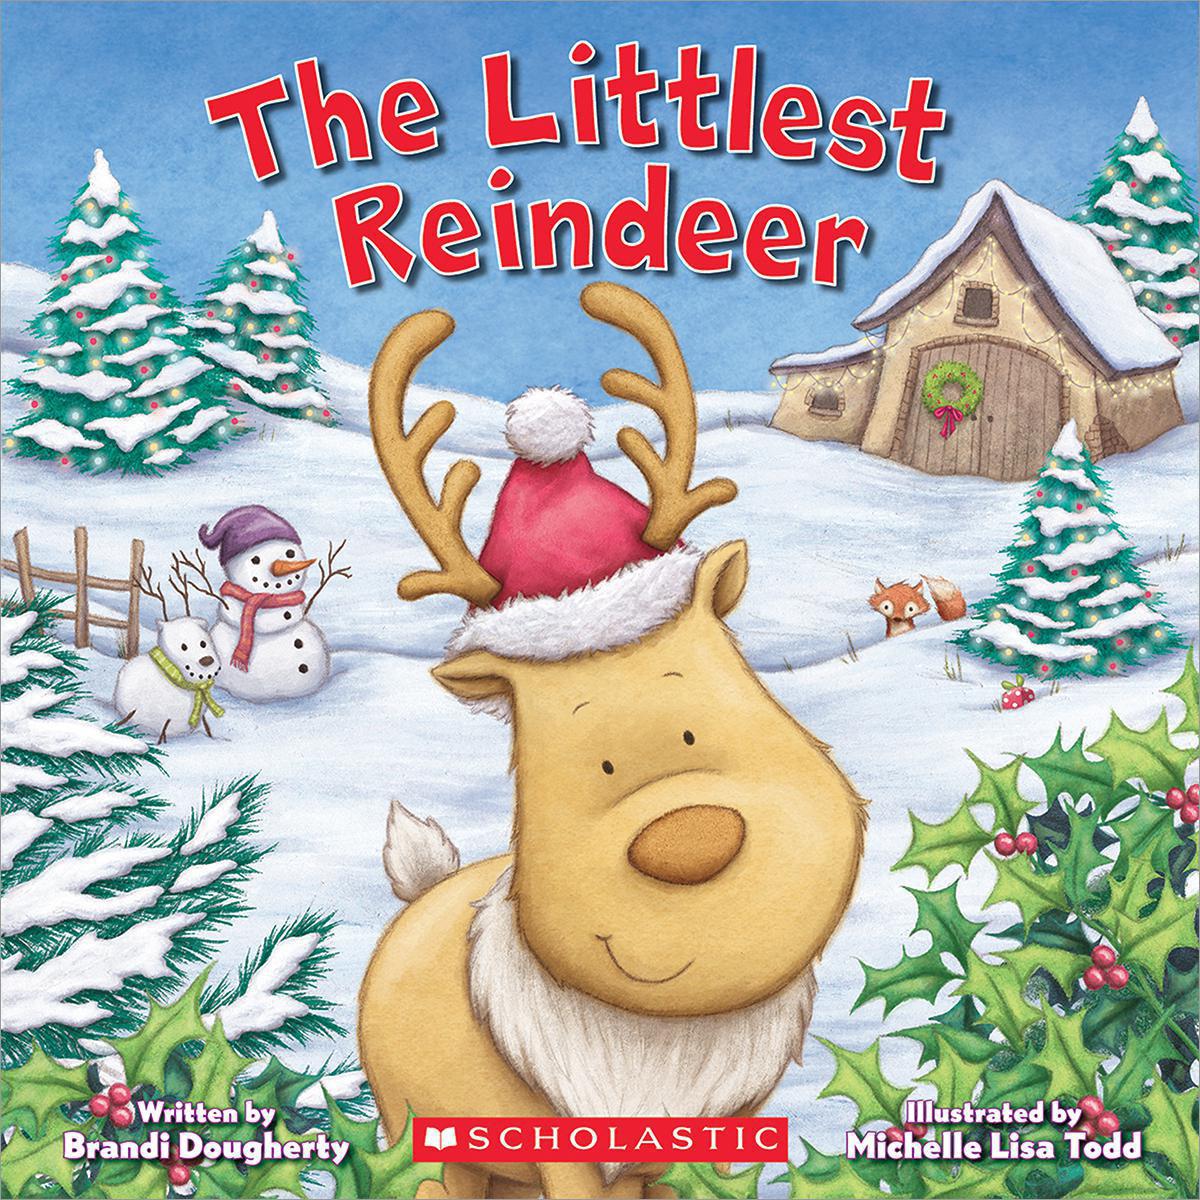  The Littlest Reindeer 10-Pack 